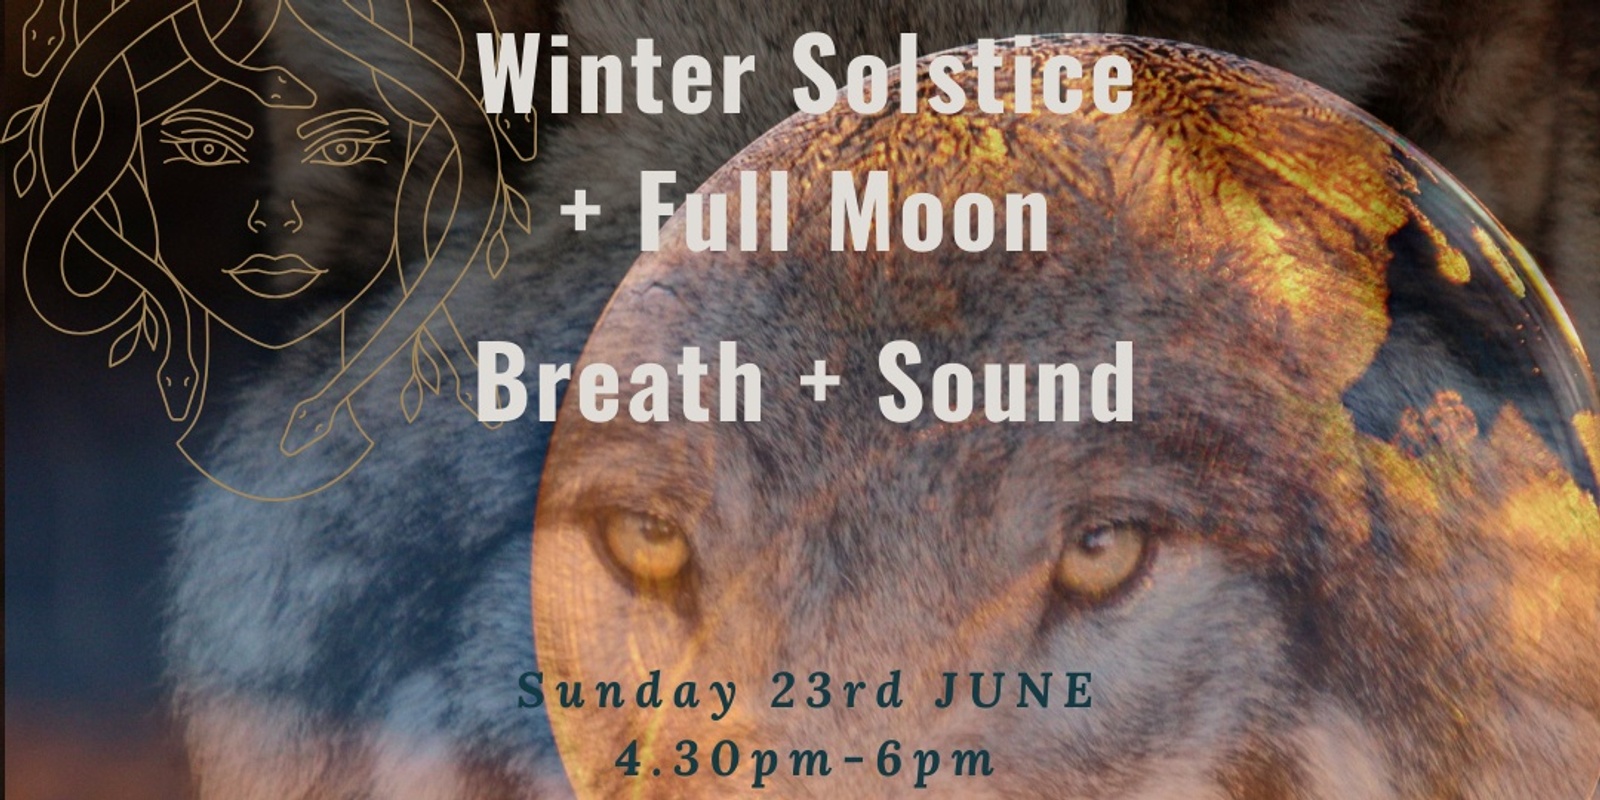 Banner image for Winter Solstice * Full Moon Breath + Sound - BRUNSWICK